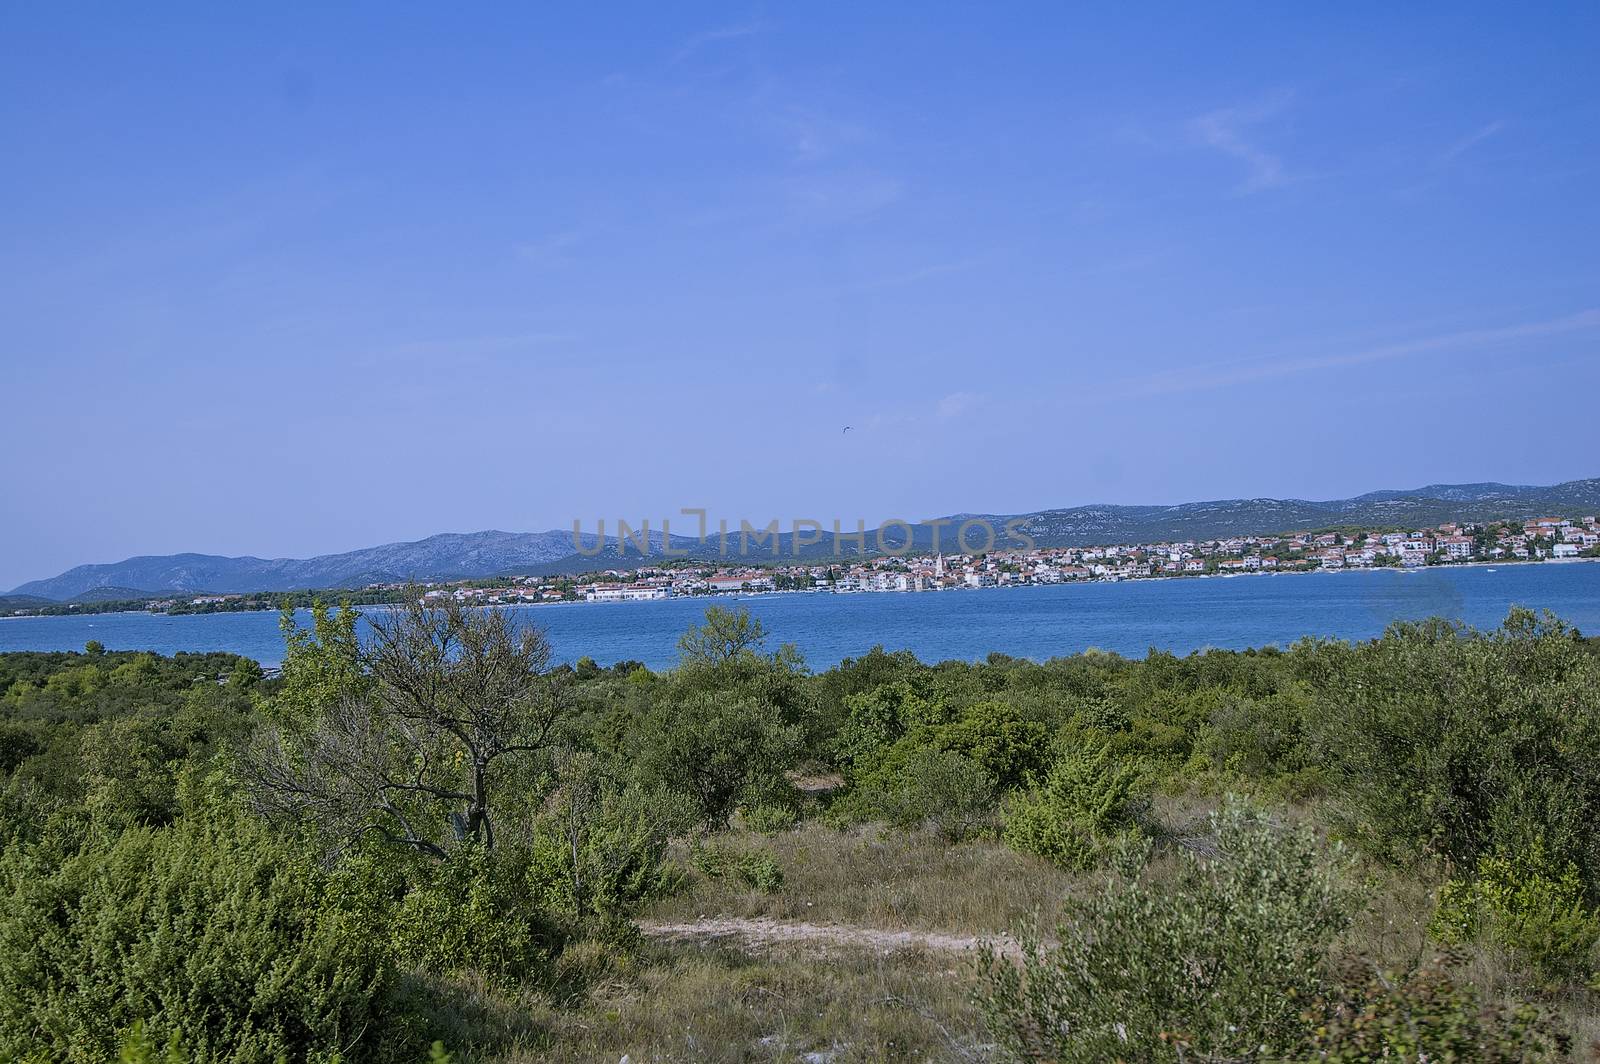 View of the coast of Murter in Croatia